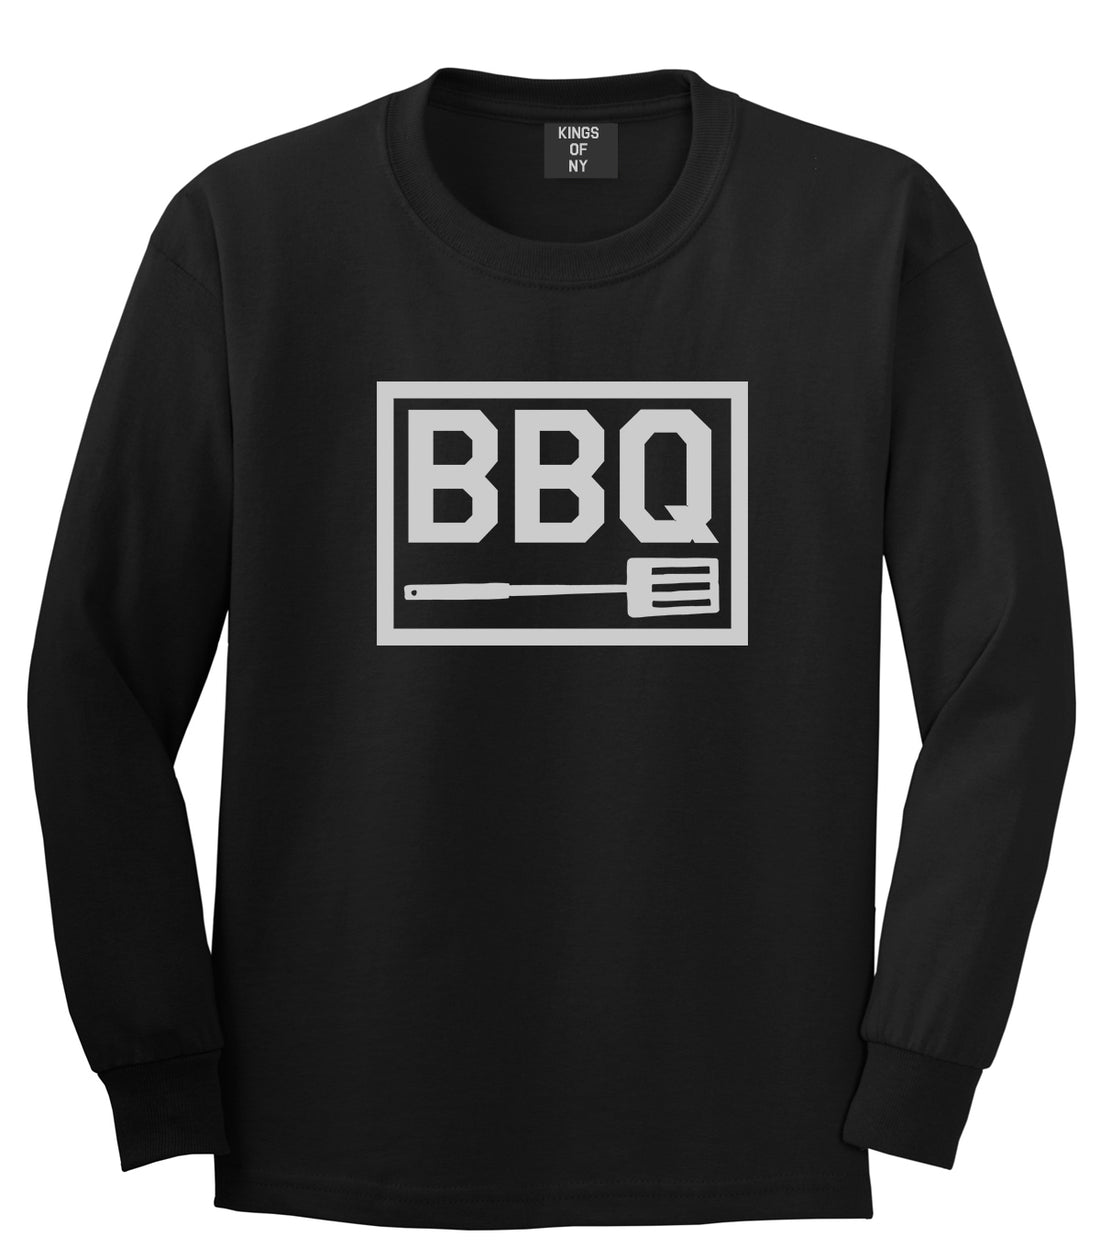 BBQ Barbecue Spatula Black Long Sleeve T-Shirt by Kings Of NY